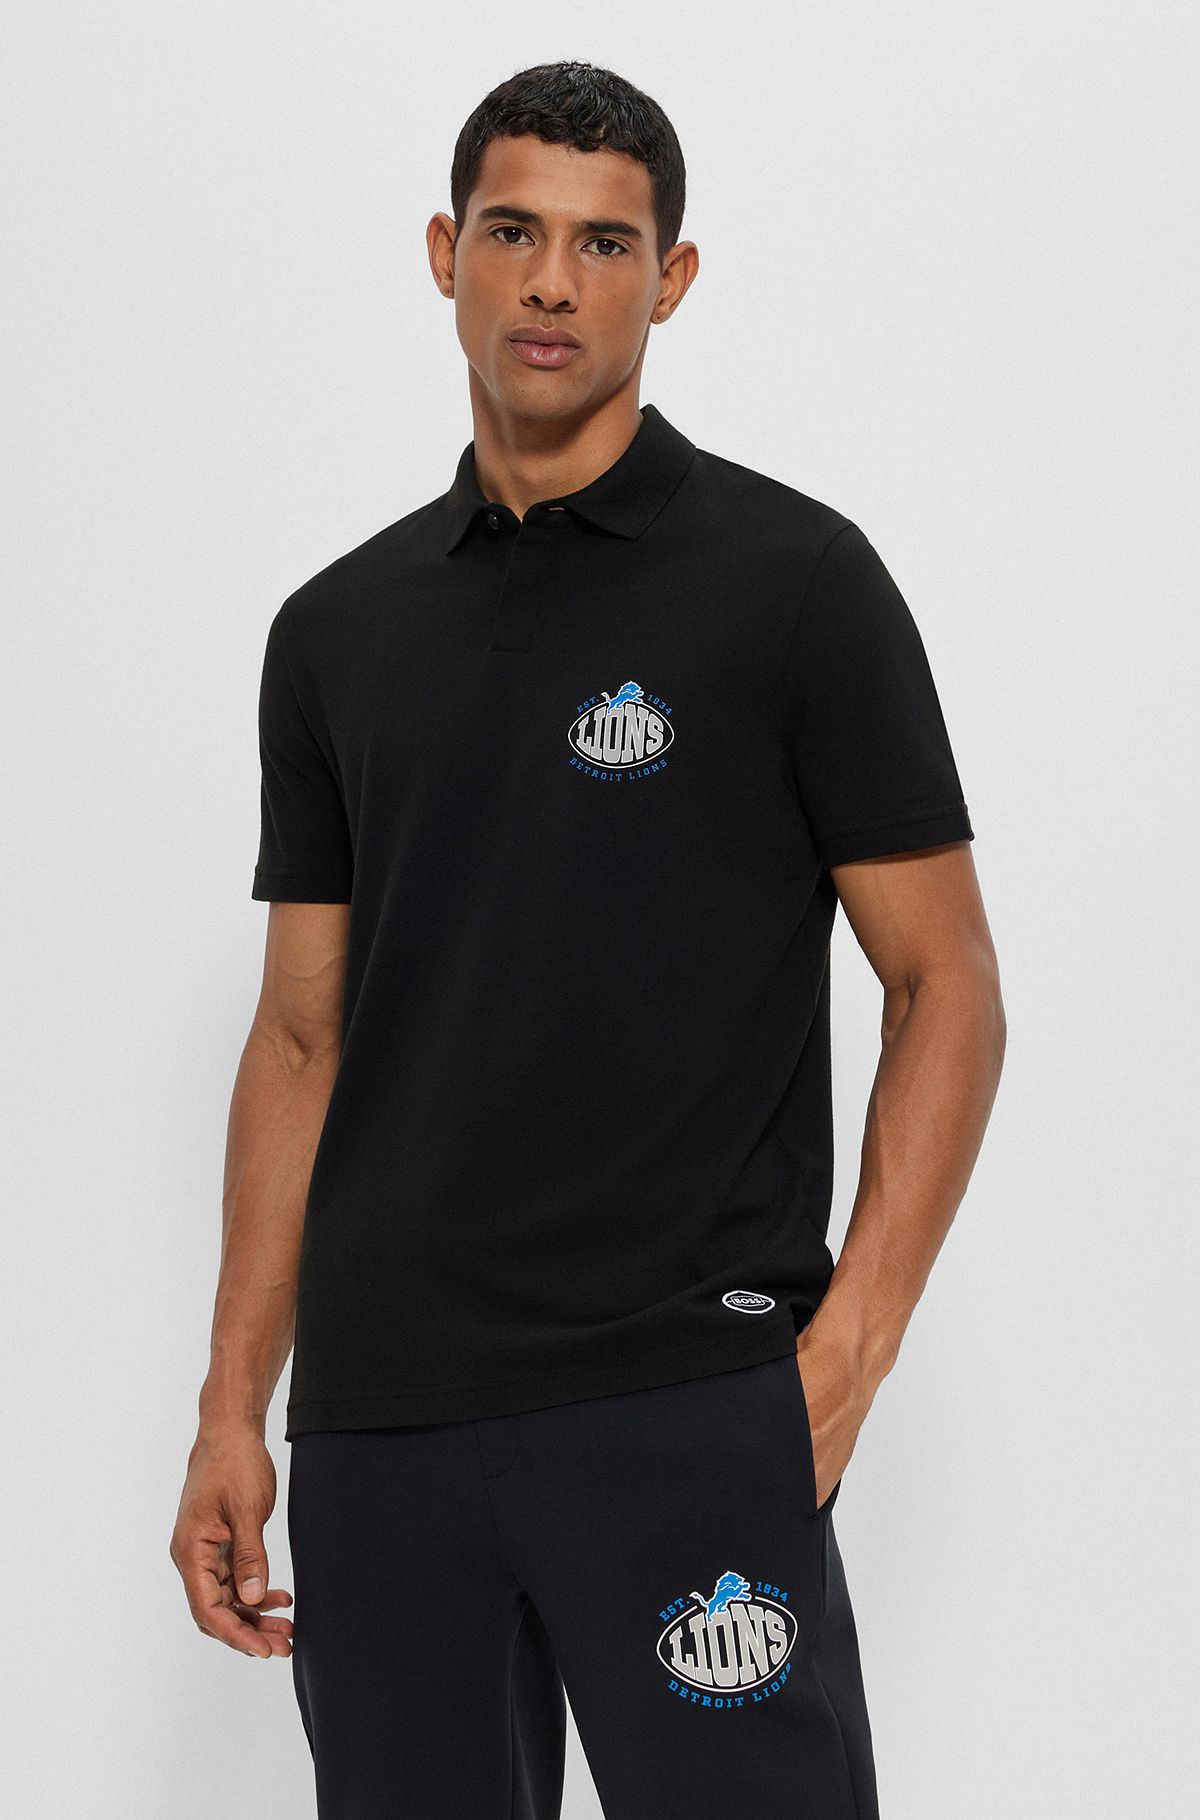 BOSS x NFL cotton-piqué polo shirt with collaborative branding, Lions